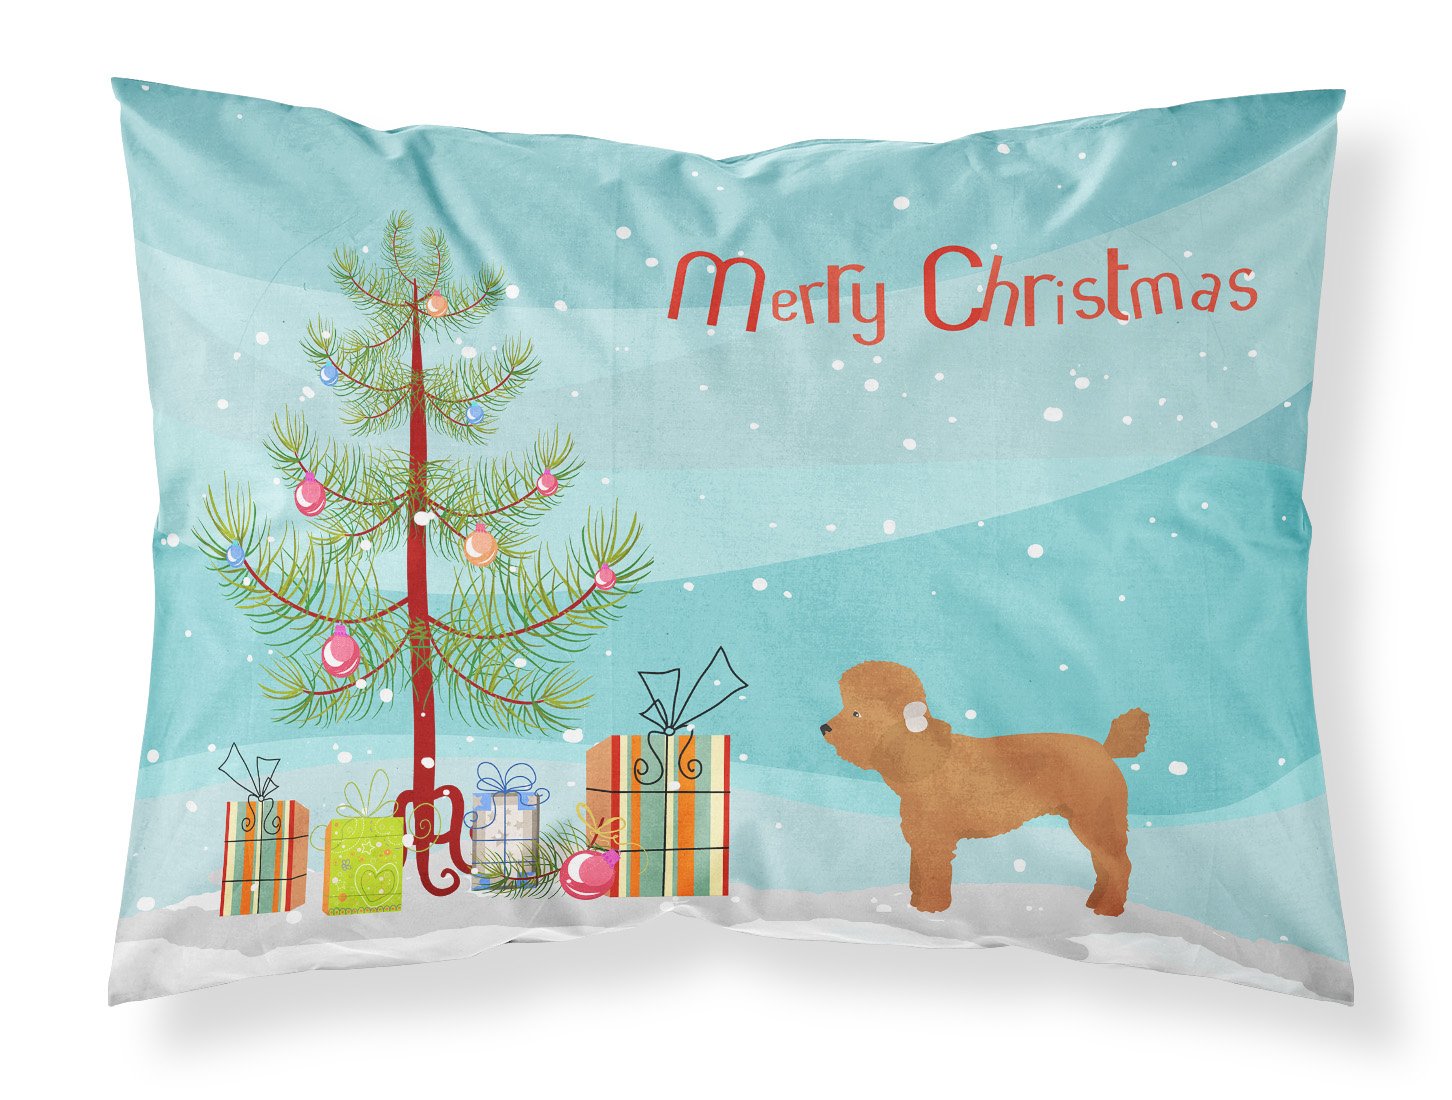 Toy Poodle Christmas Tree Fabric Standard Pillowcase CK3479PILLOWCASE by Caroline's Treasures